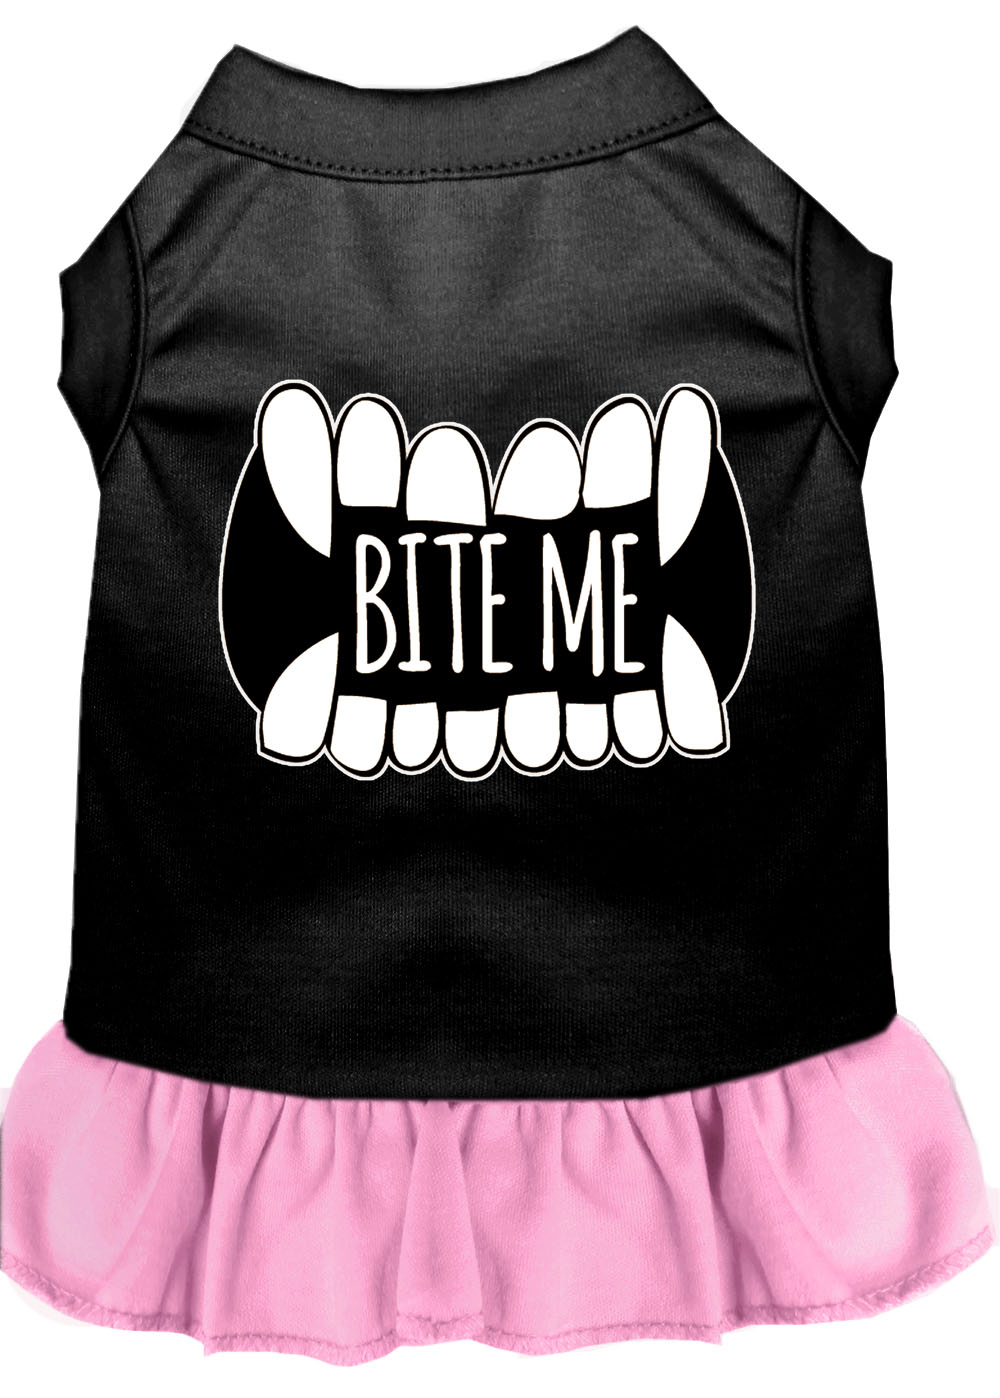 Bite Me Screen Print Dog Dress Black with Light Pink XL